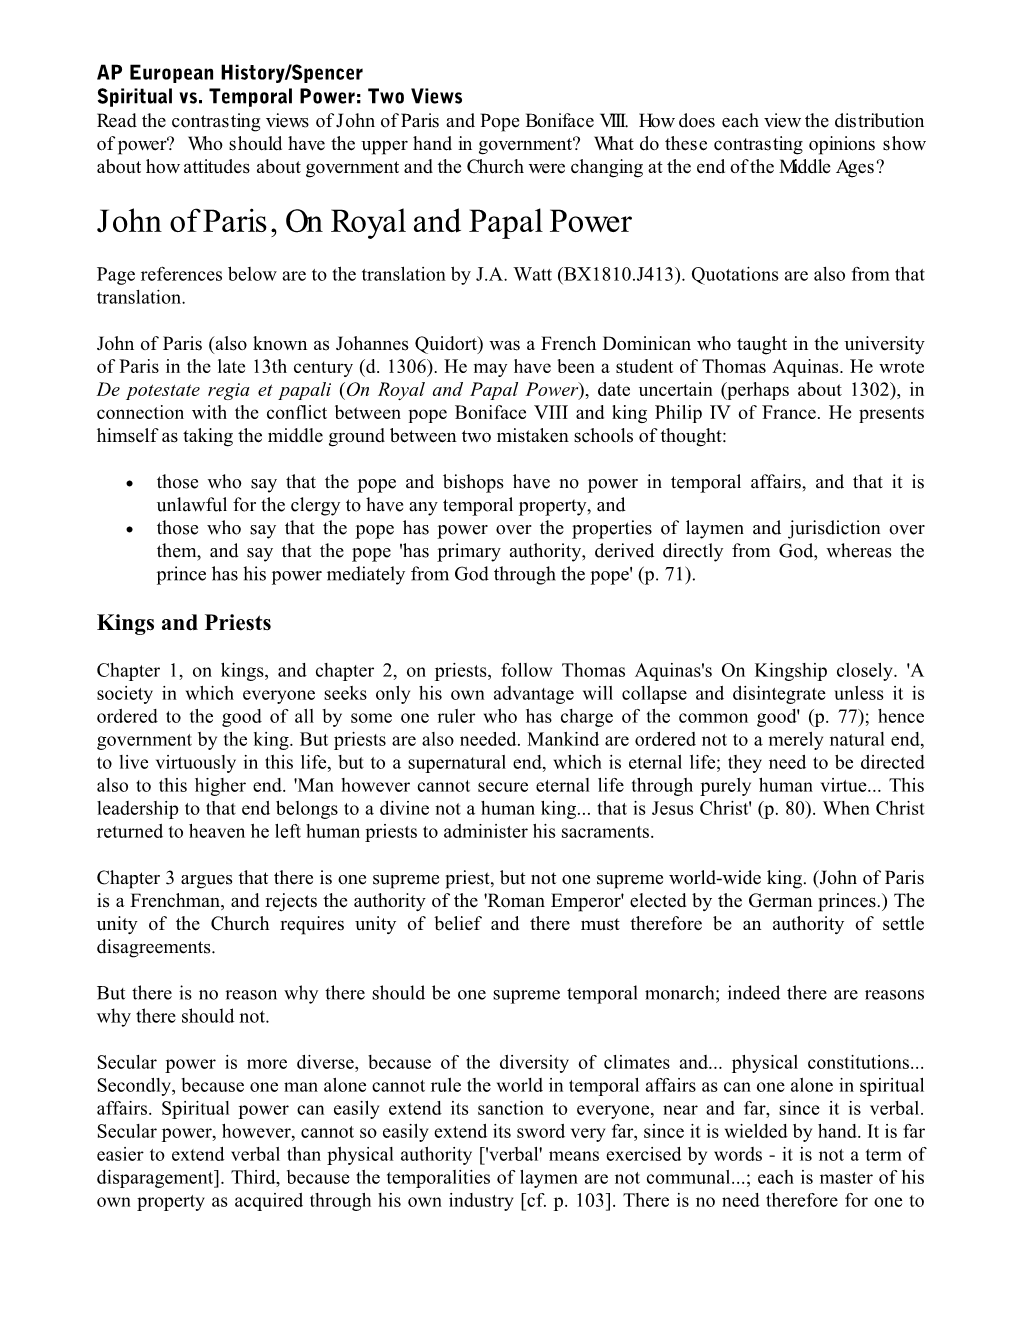 John of Paris, on Royal and Papal Power